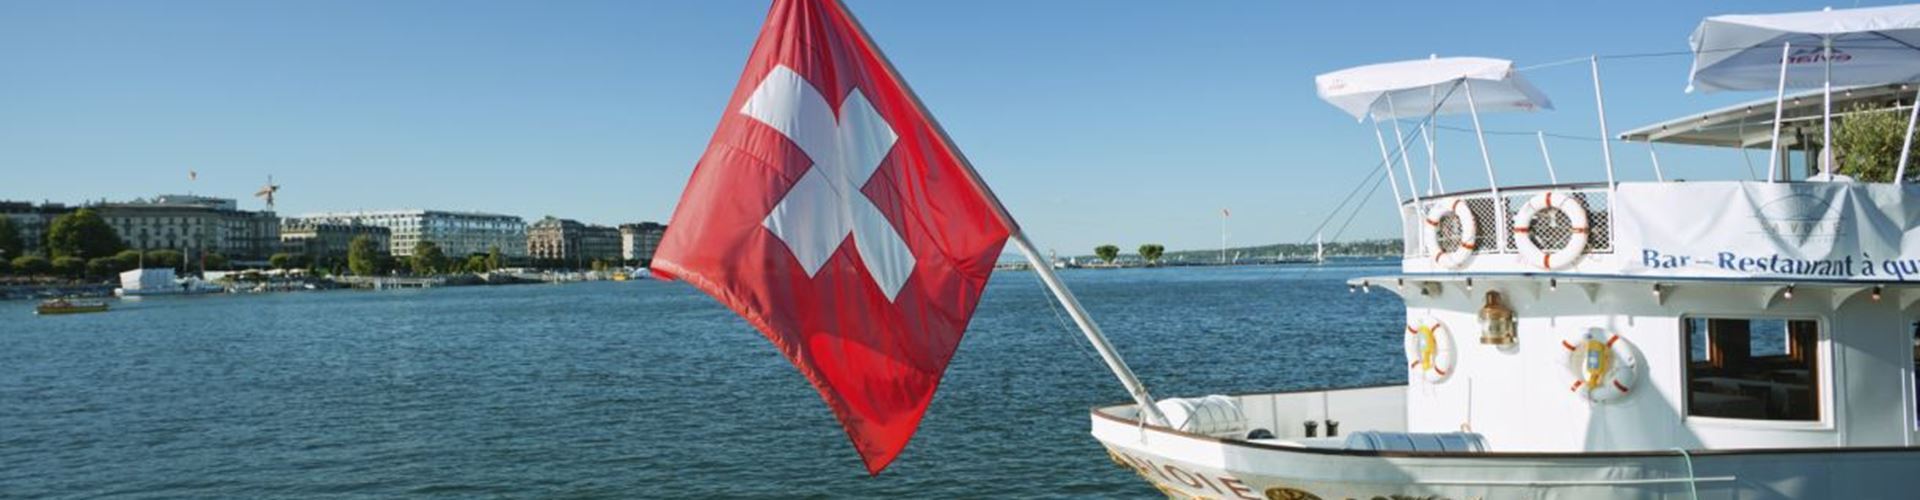 Switzerland to keep cap on franc until 2016